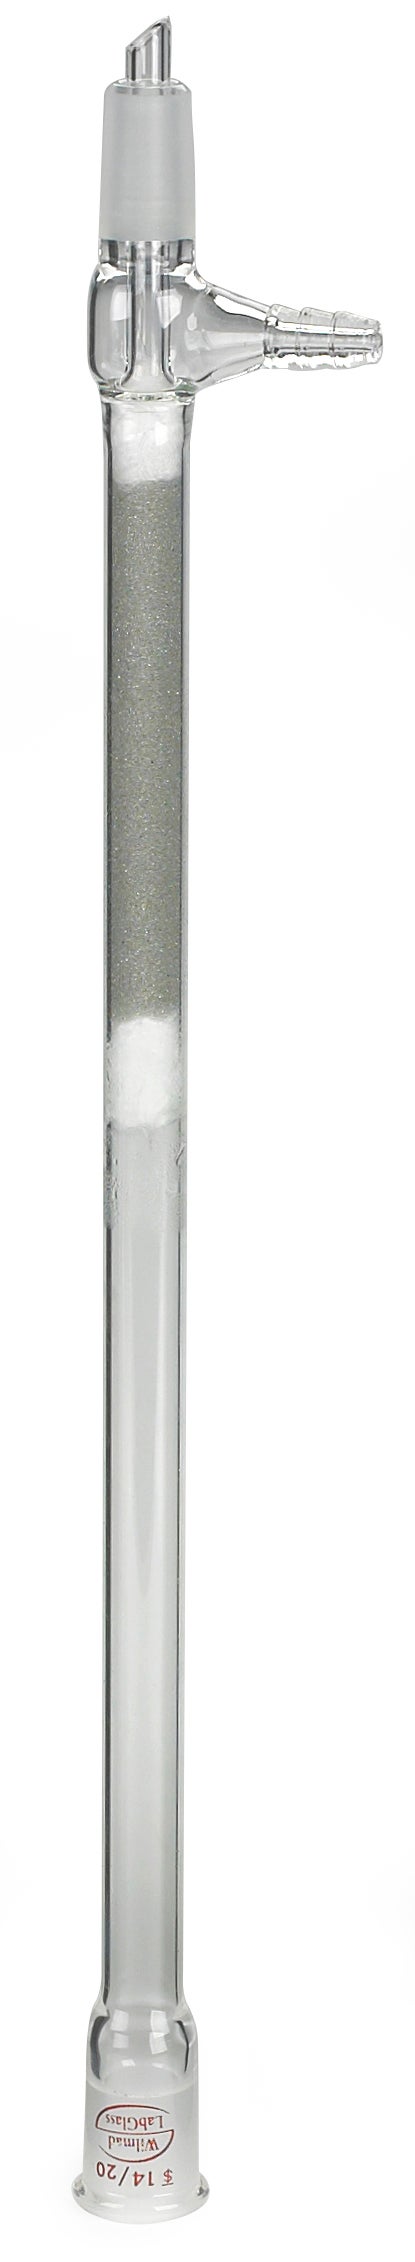 Mercury absorber column